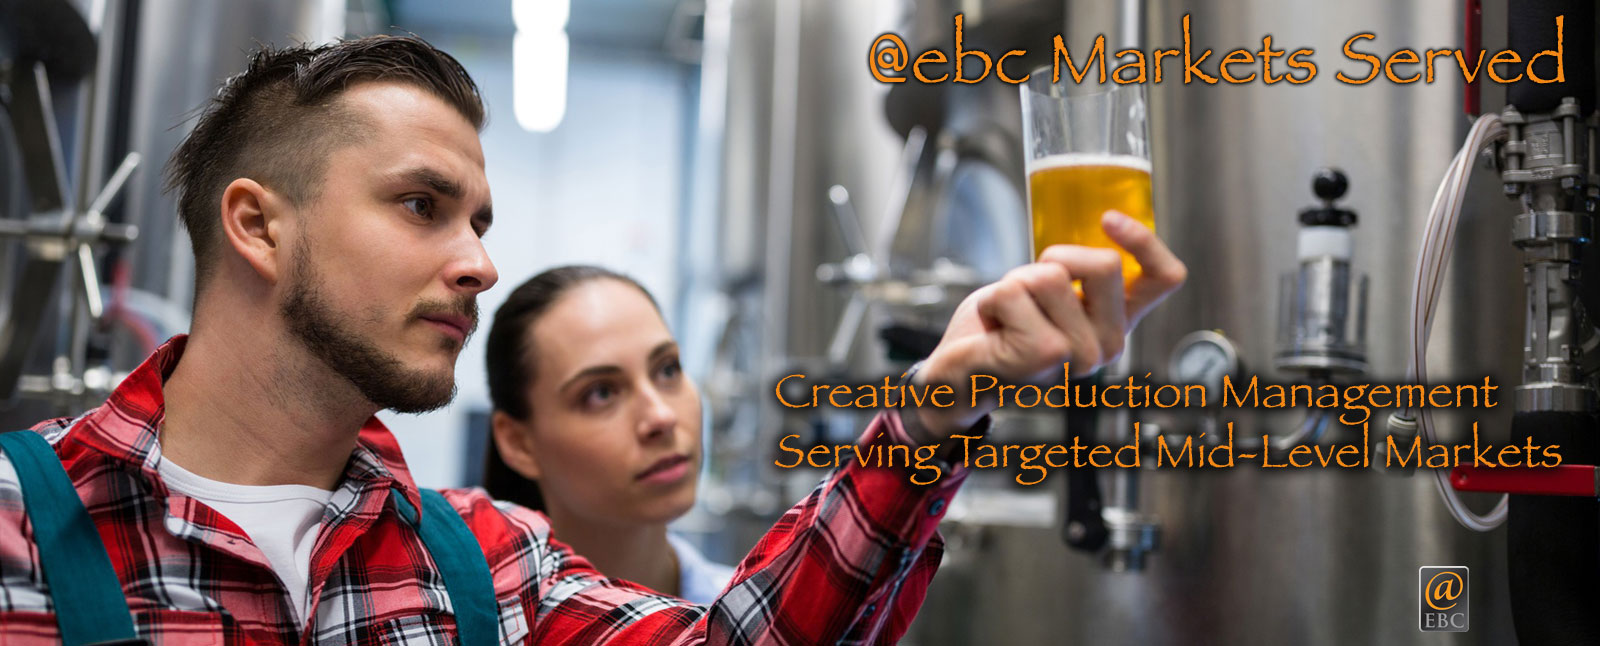 at ebc serves mid market companies fr creative web design development marketing